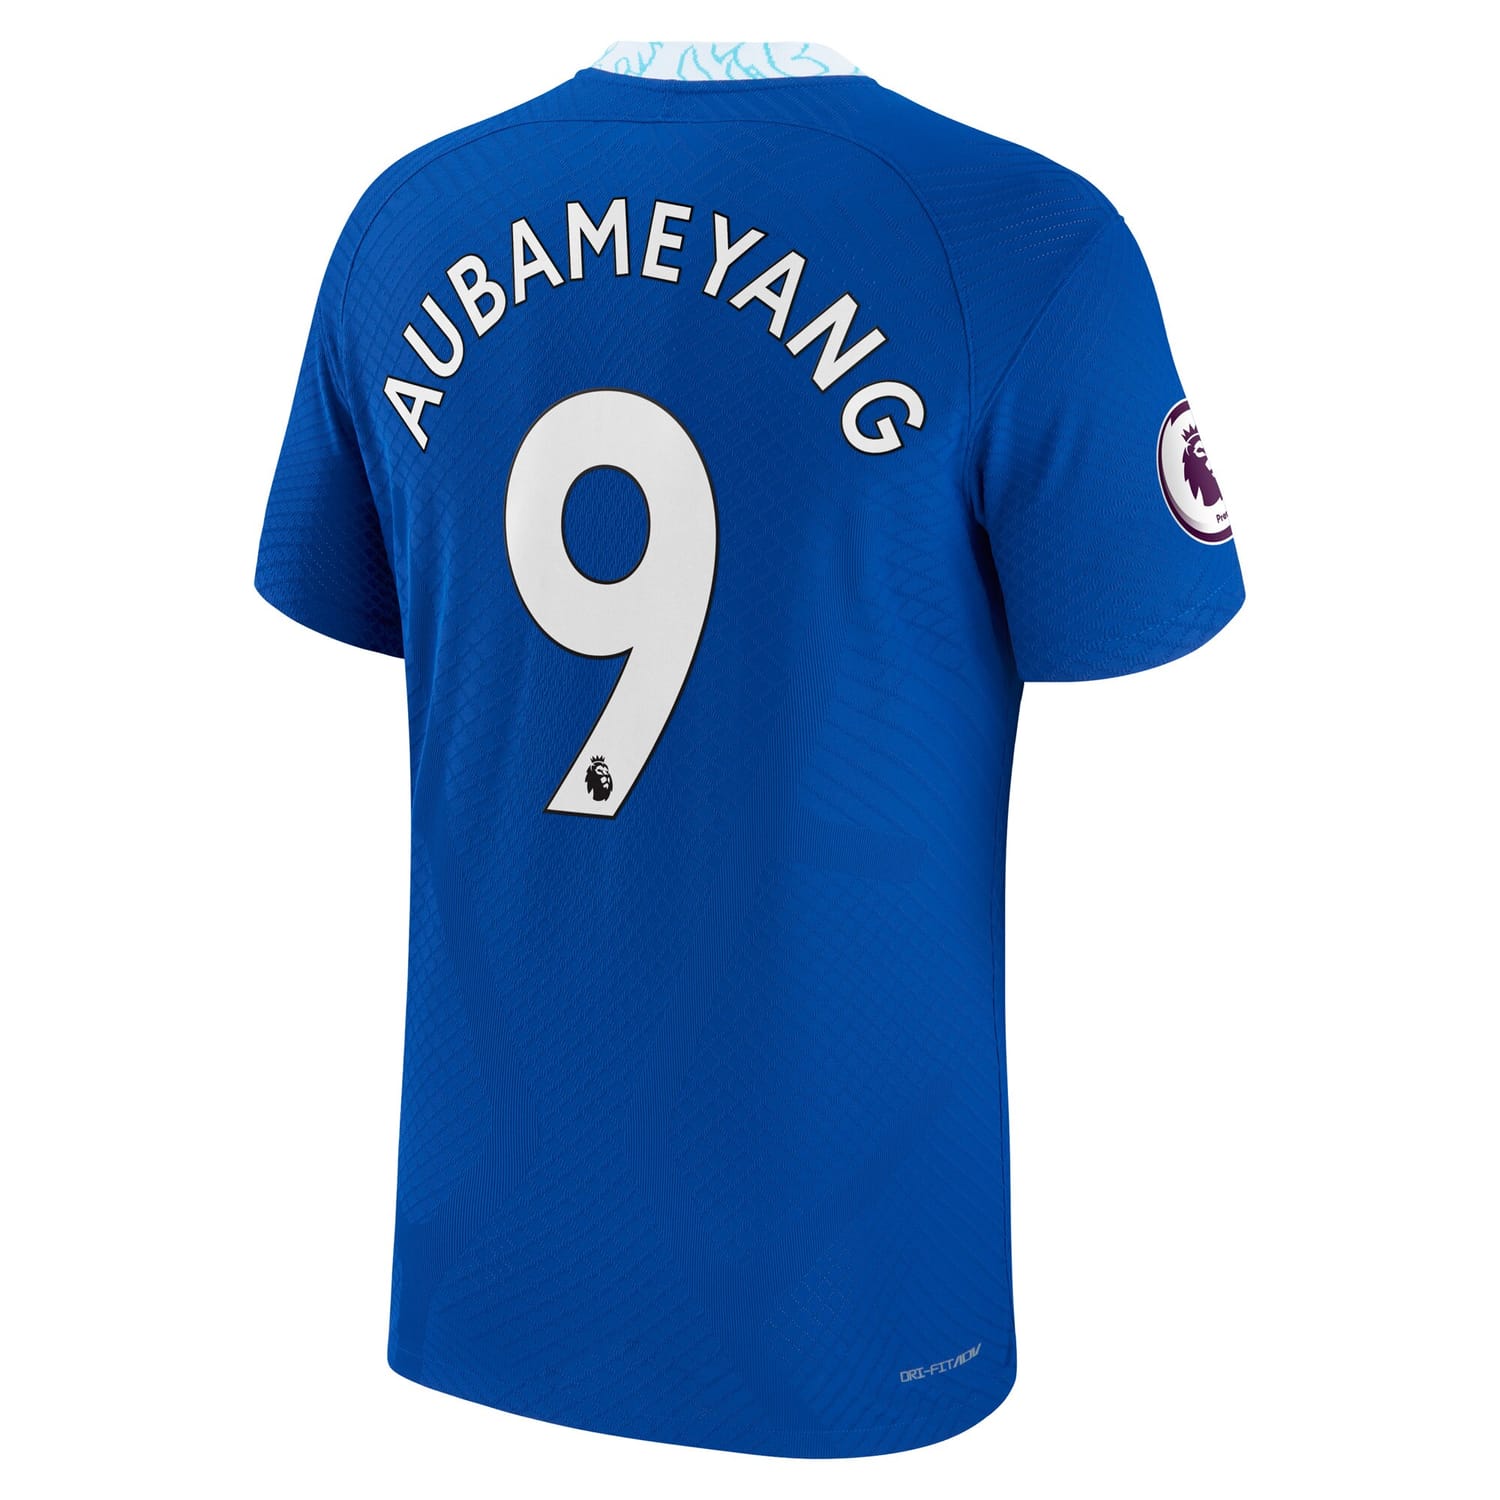 Premier League Chelsea Home Authentic Jersey Shirt Blue 2022-23 player Pierre-Emerick Aubameyang printing for Men